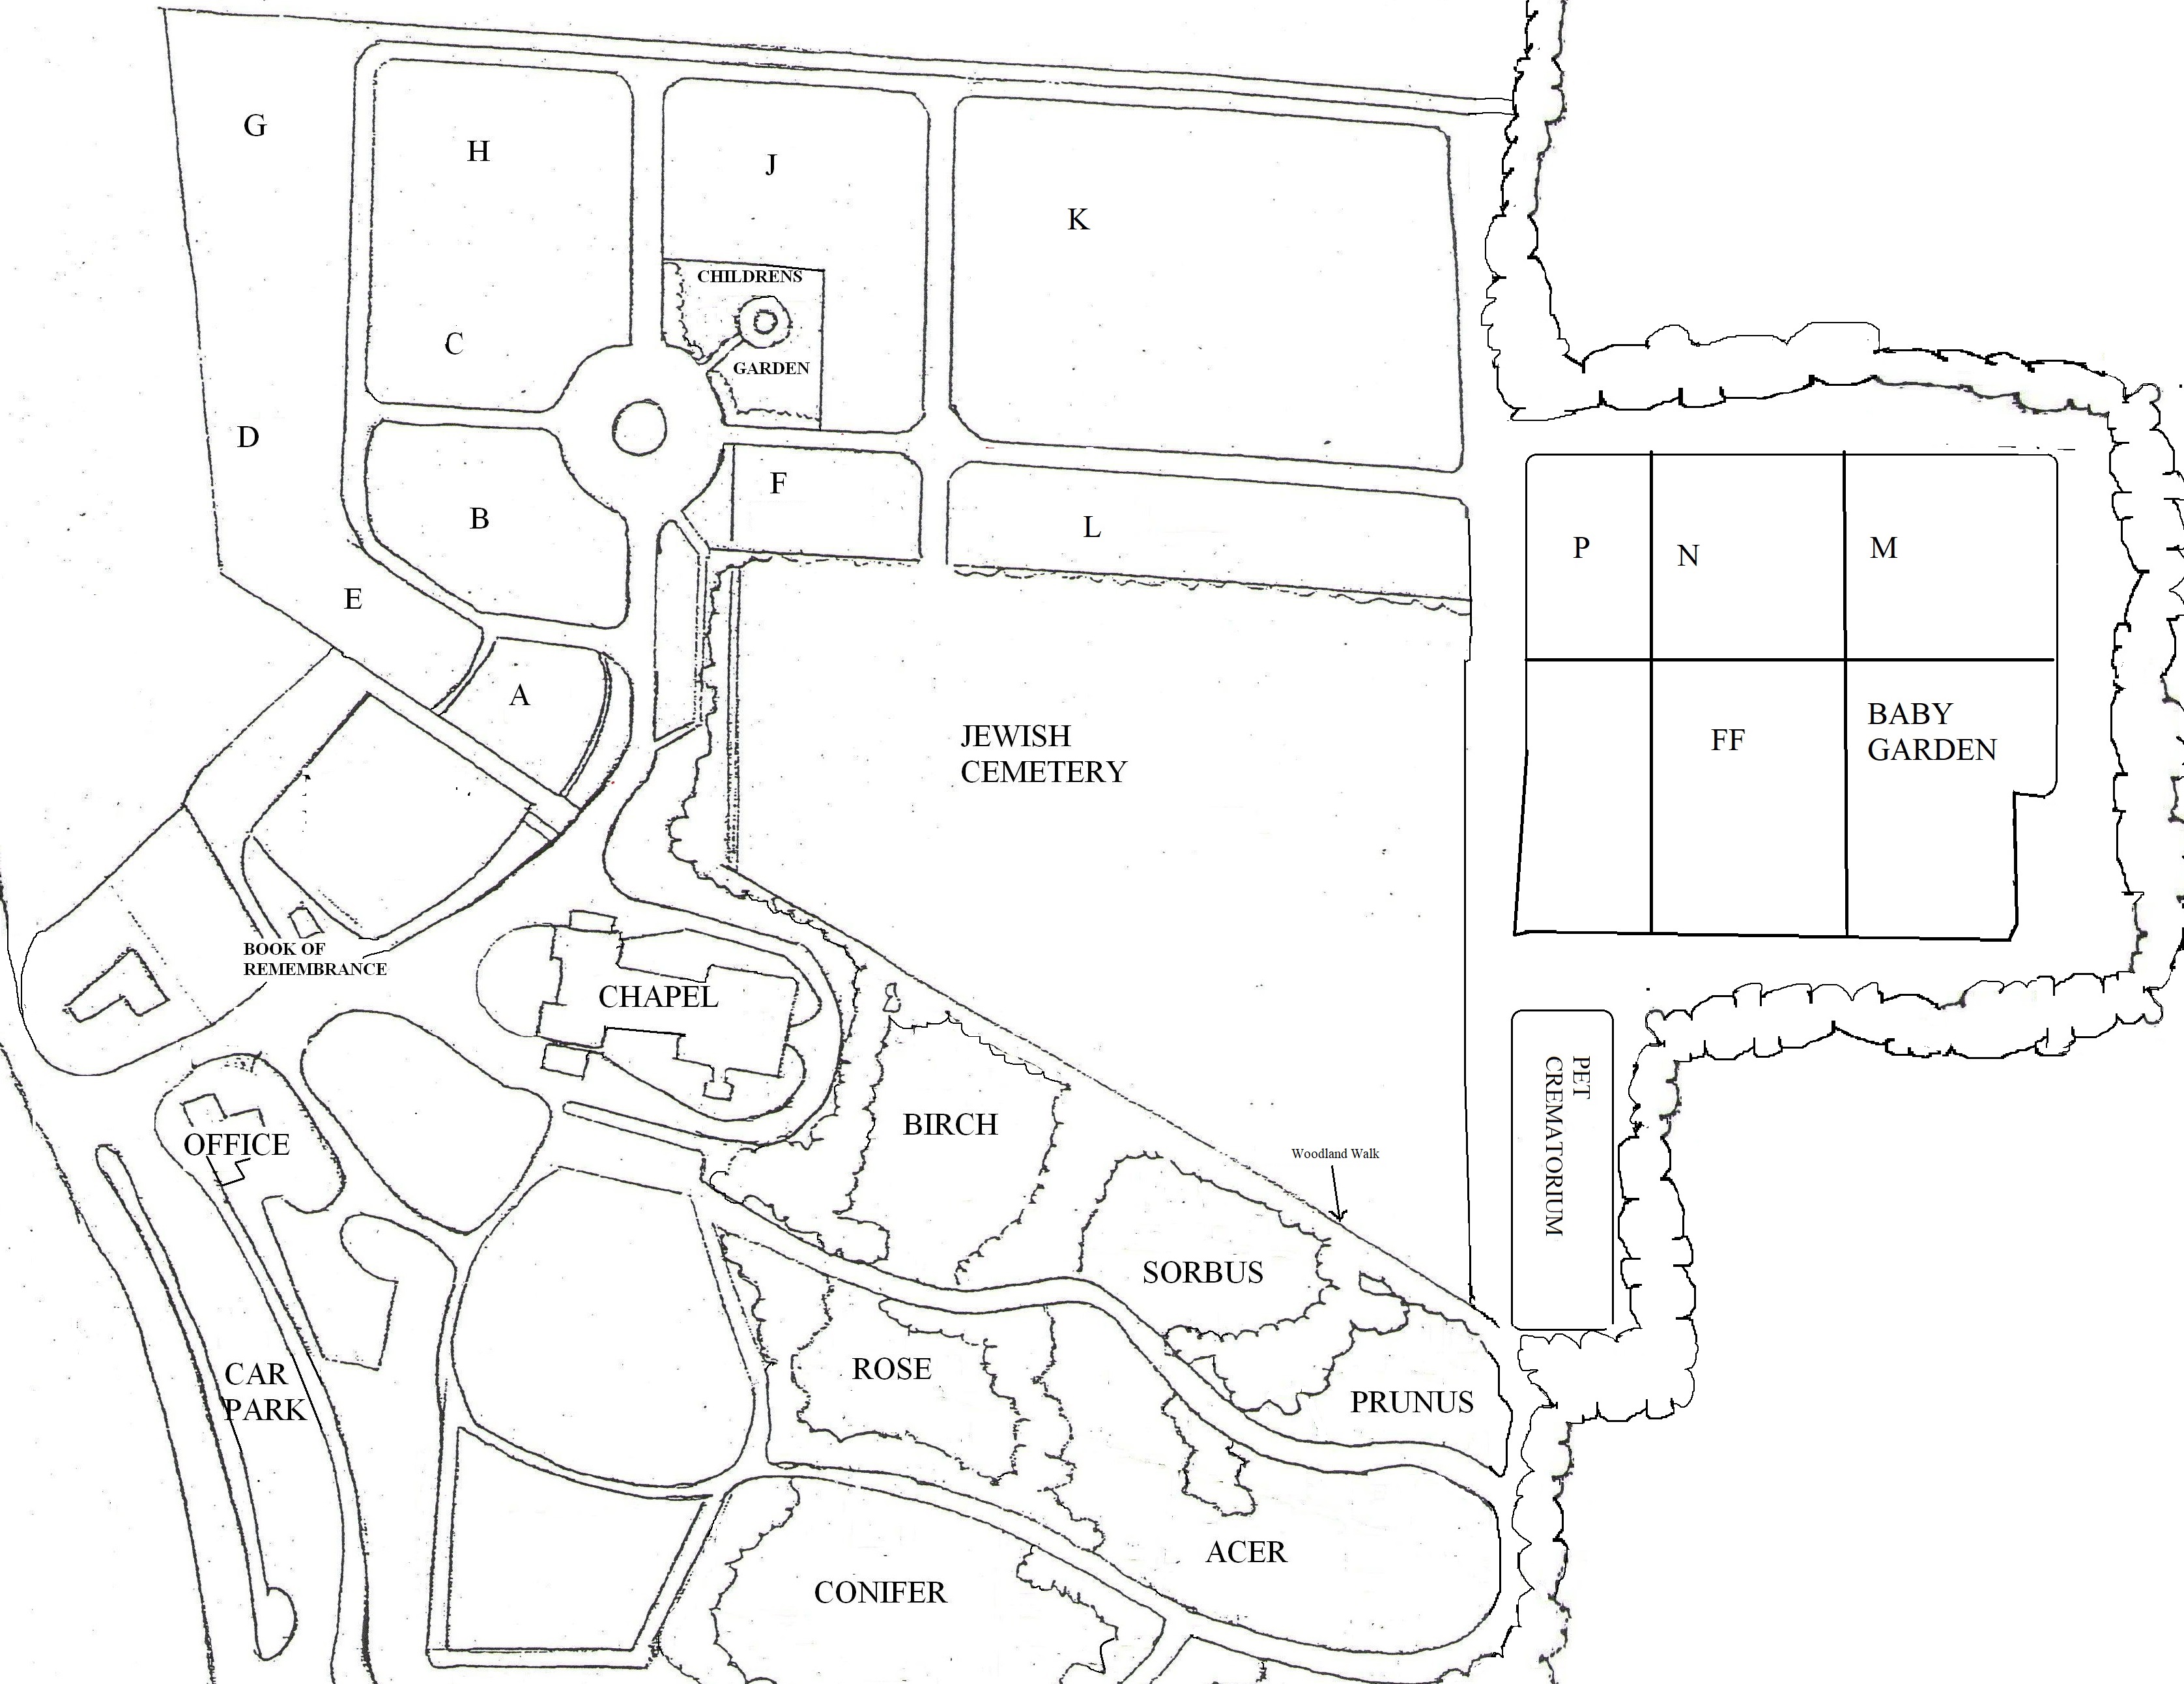 Dunham Lawn Cemetery Map